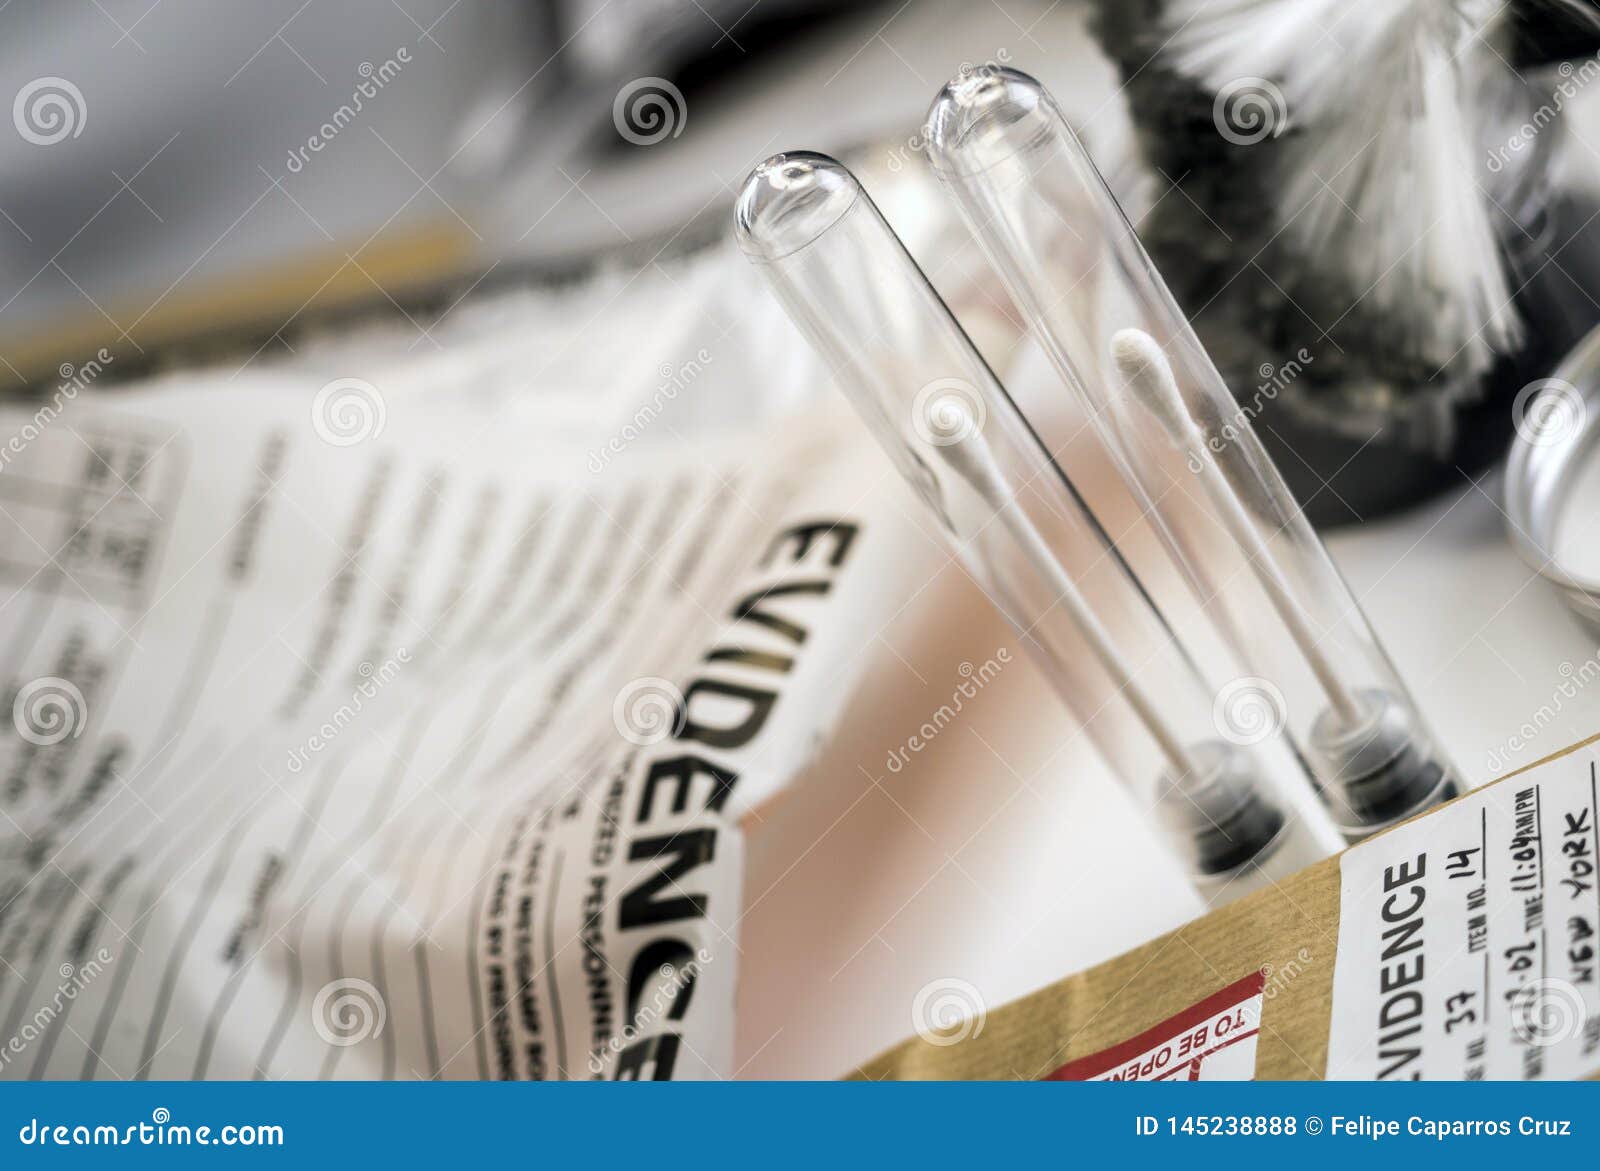 detail of dna sampling tubes in laboratorio forensic equipment